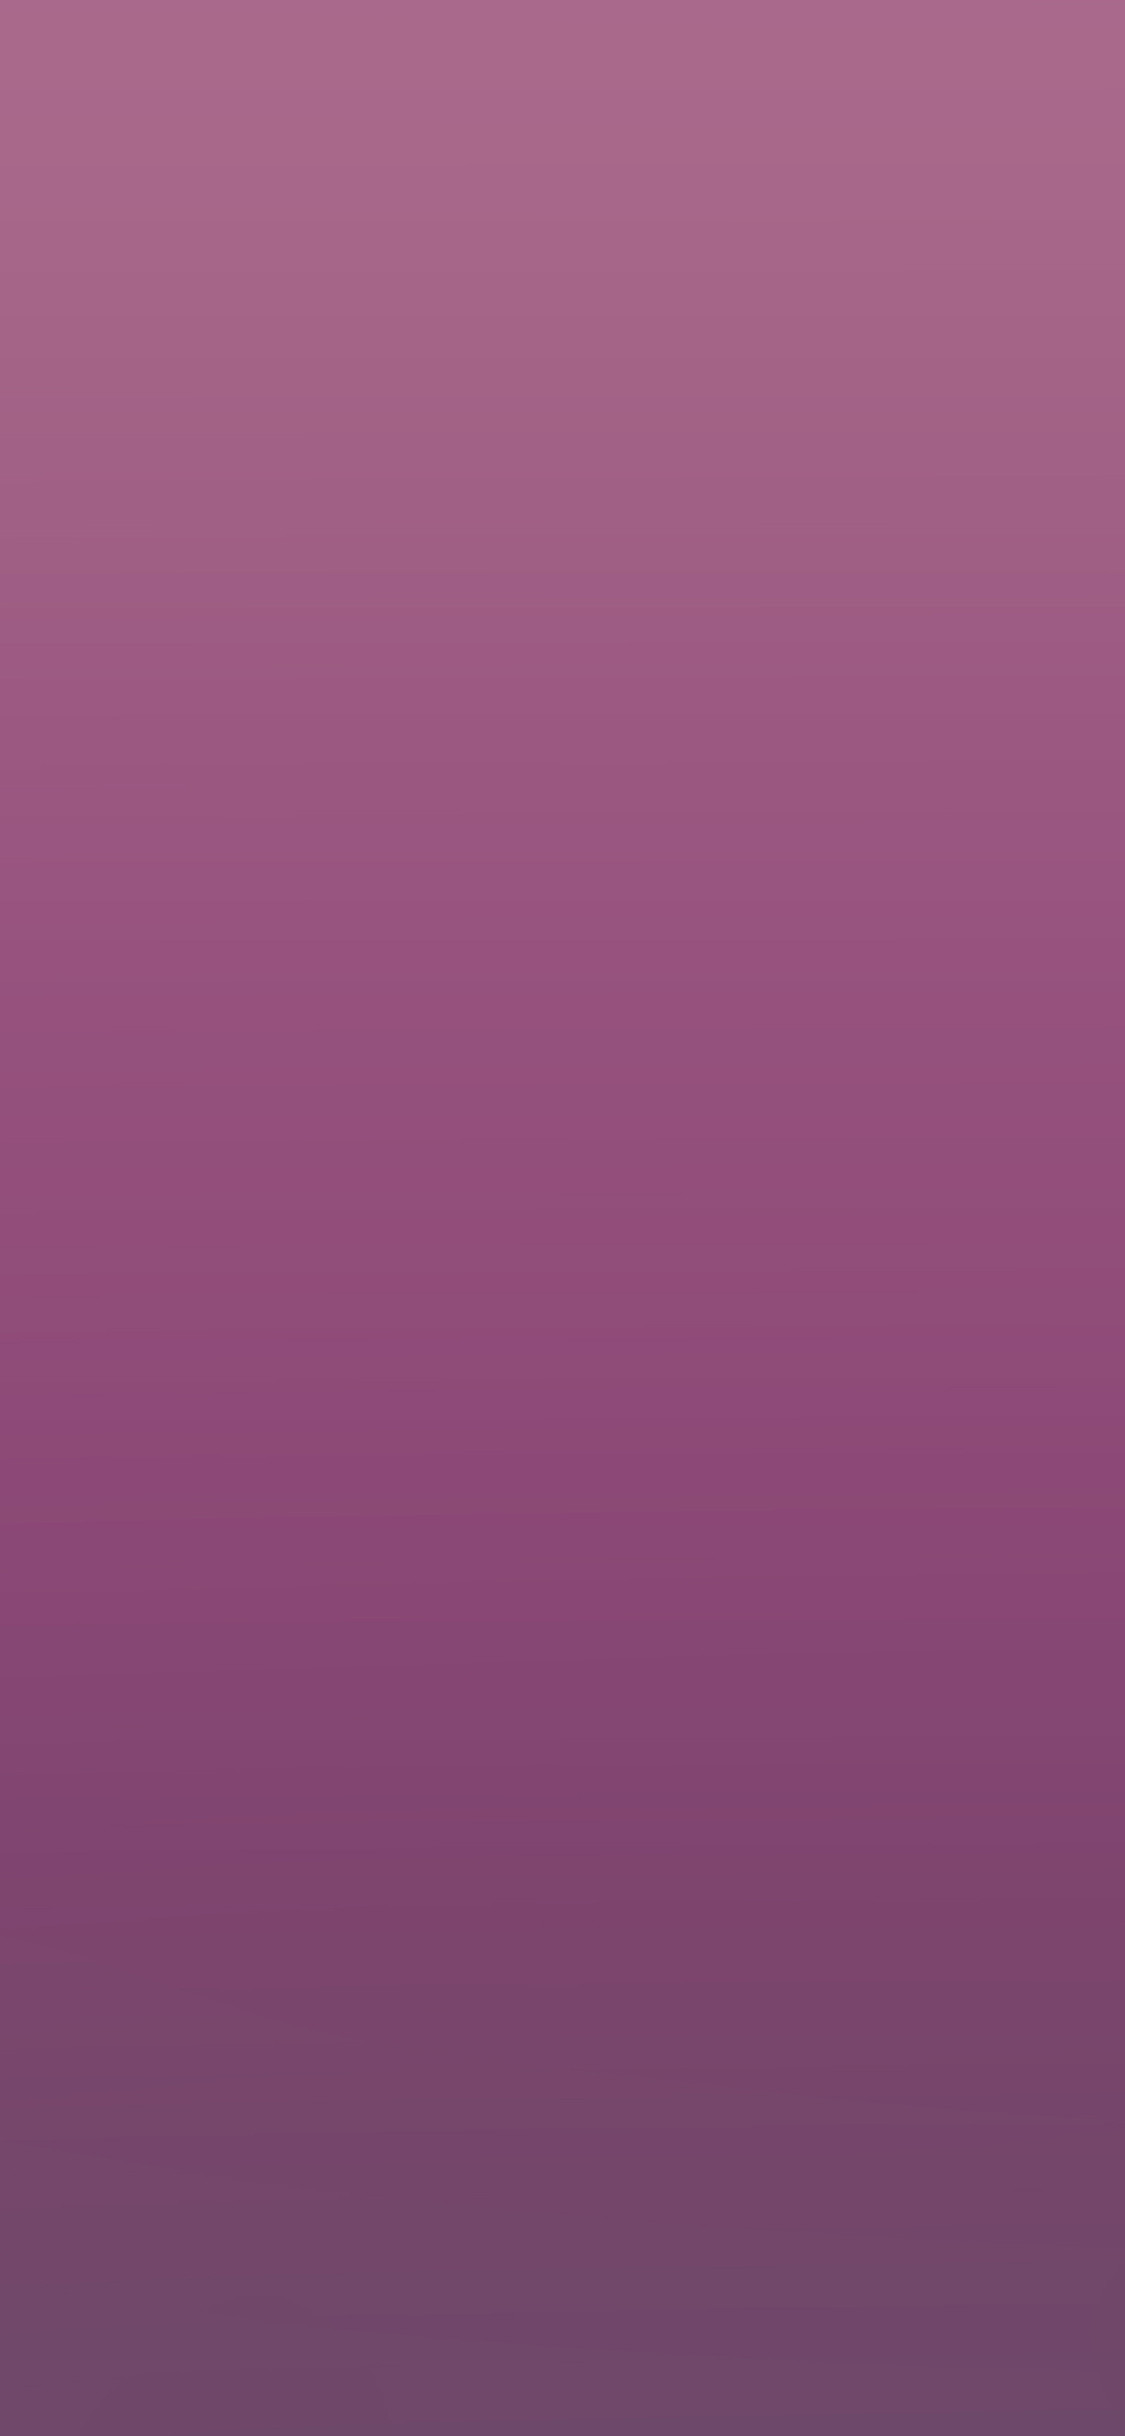 1125x2436 iPhoneXpapers.com | iPhone X wallpaper | si65-red-purple-violet-rose -quartz-gradation-blur